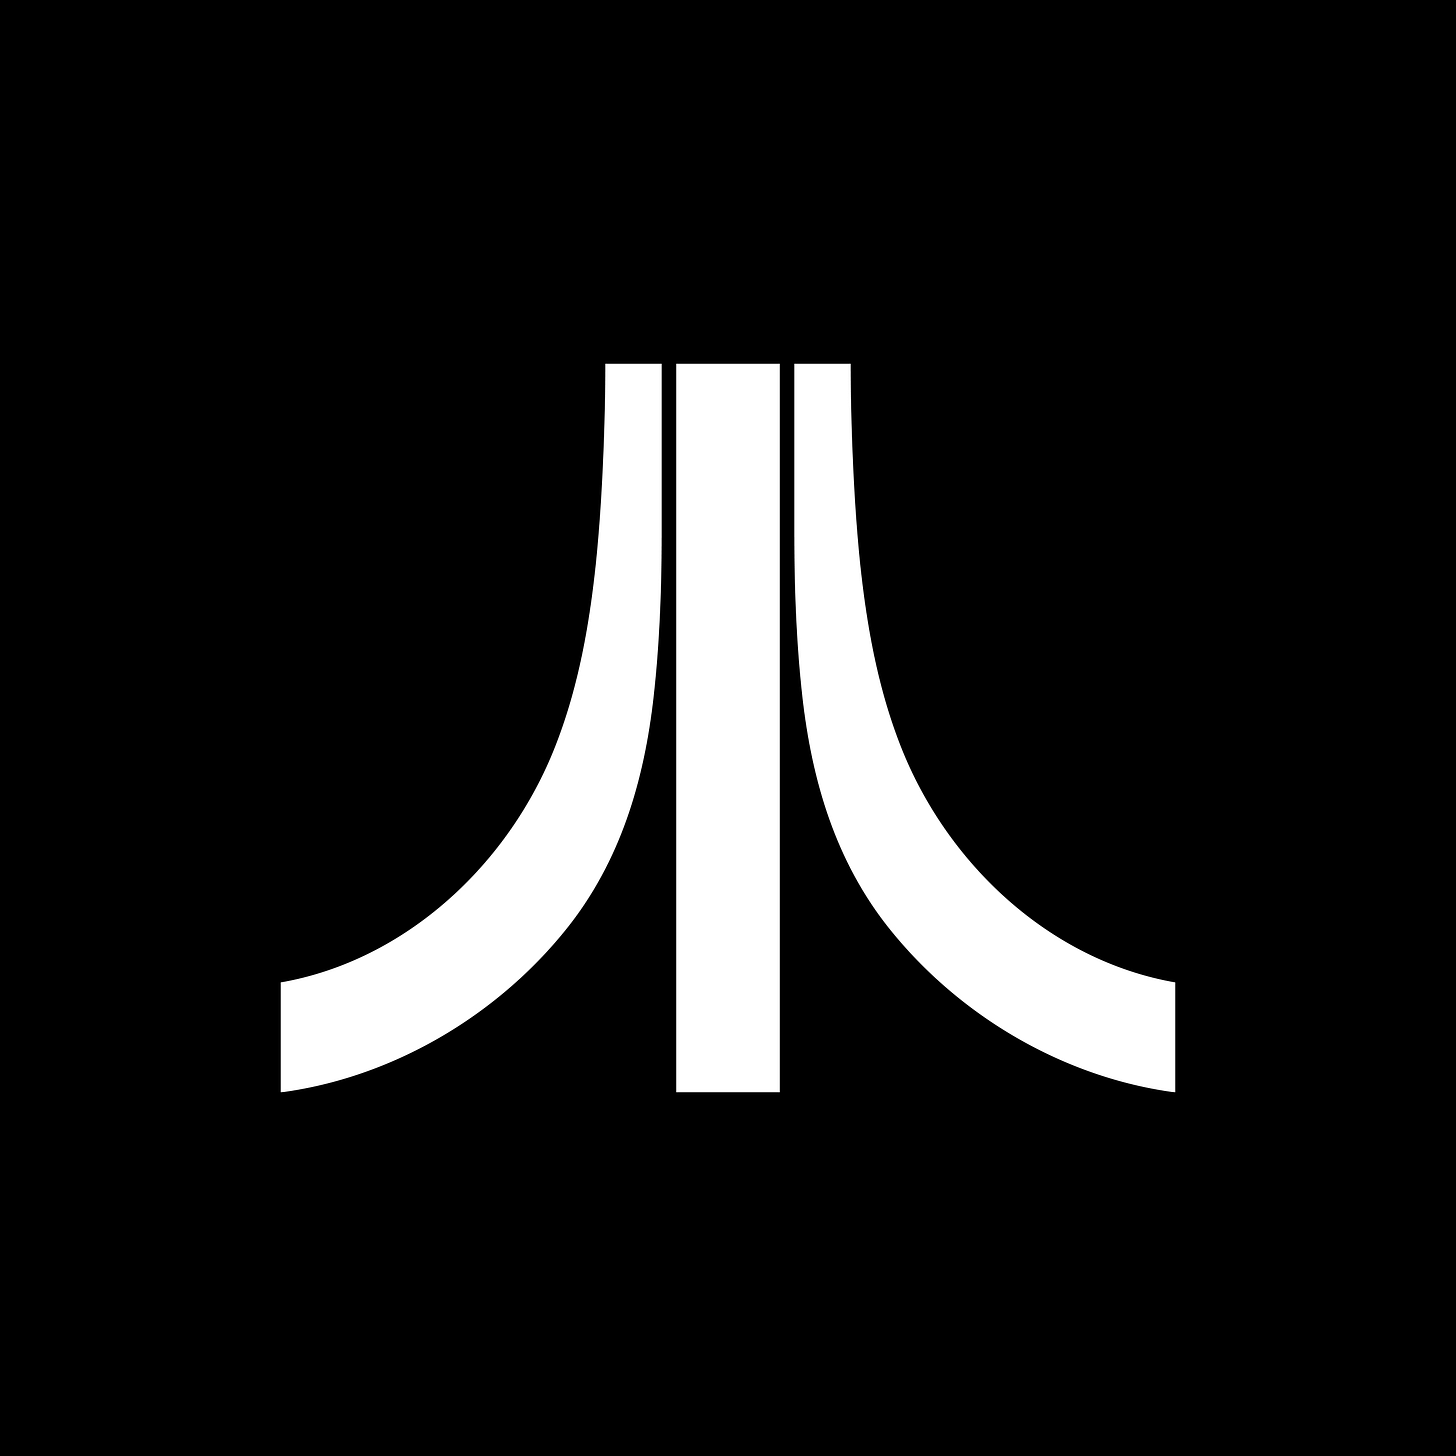 Atari logo design, 1972, George Oppermann and Evelyn Seto, LogoArchive, Logo Histories